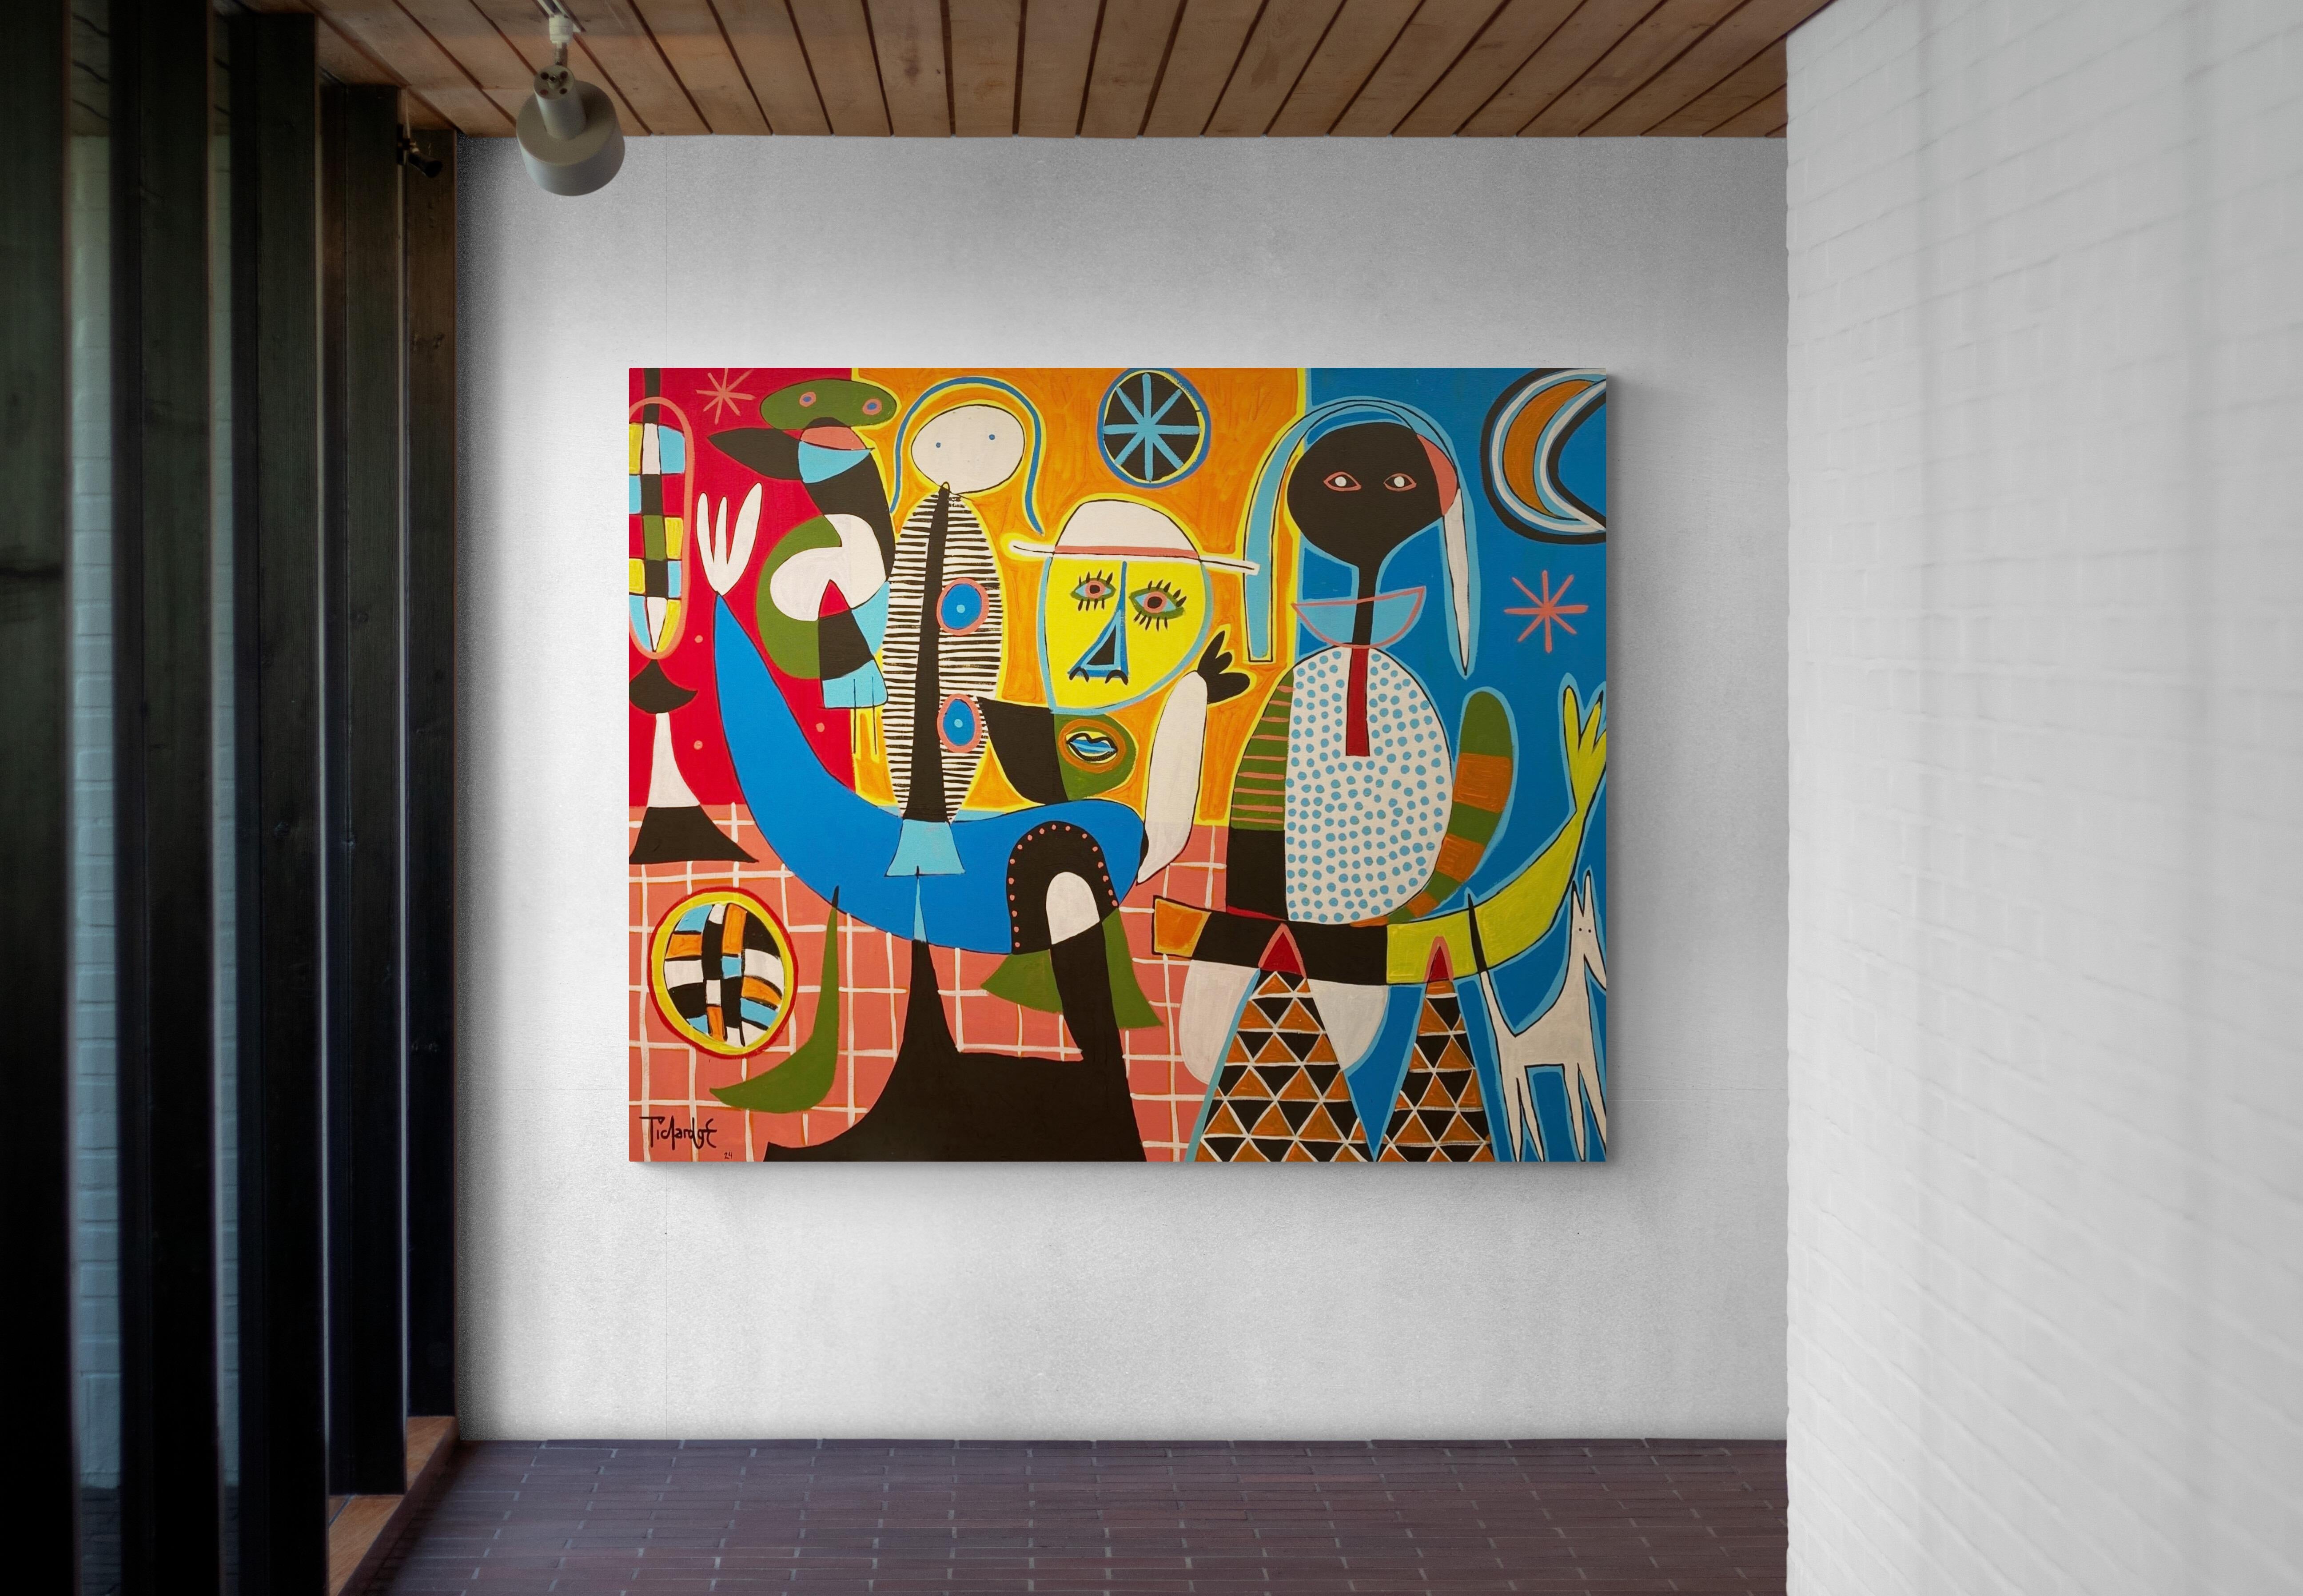 Contemporary Art, Abstract Painting
Acrylic on canvas
130x160cm
Signed 




About the artist
Enrique Pichardo (Mexico City, 1973) graduated from Escuela Nacional de Pintura, Escultura y Grabado (ENPEG) “La Esmeralda”. As a Mexican Contemporary